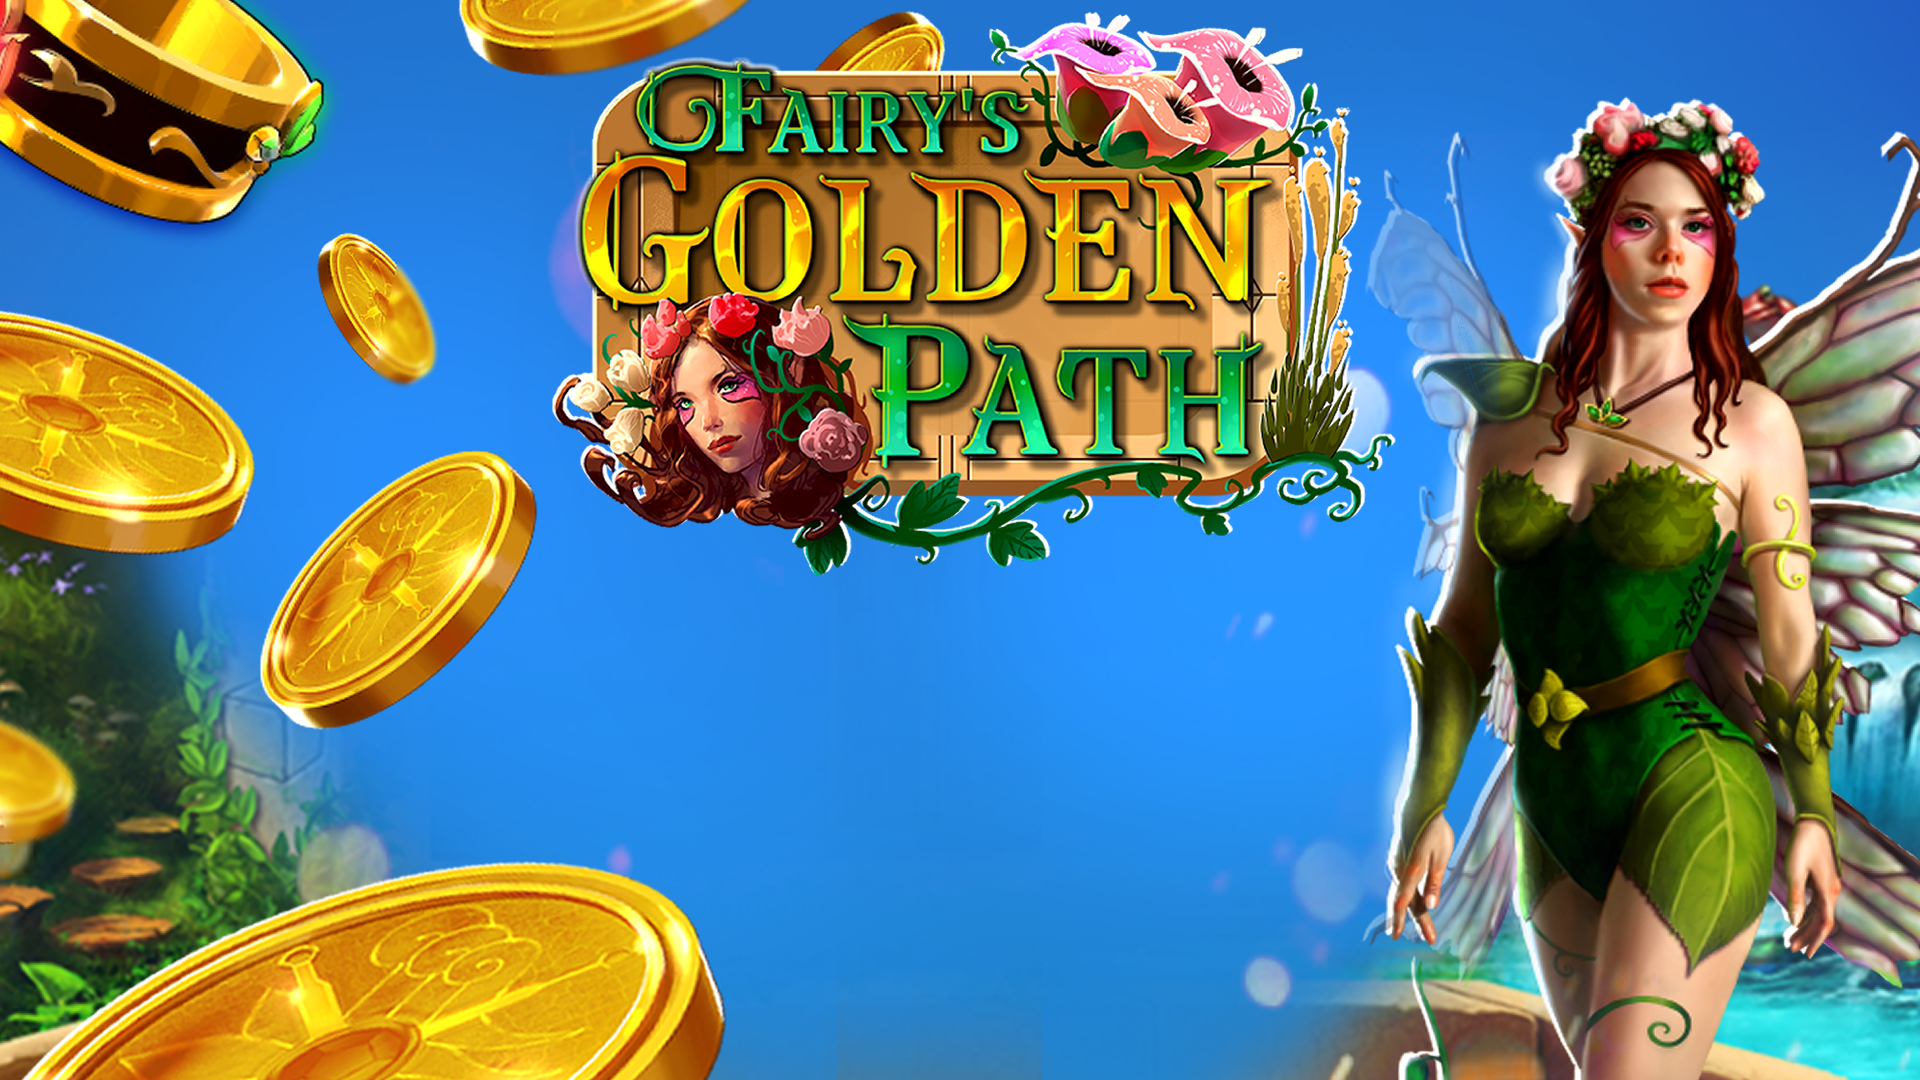 Fairys_Golden_Path_play_now